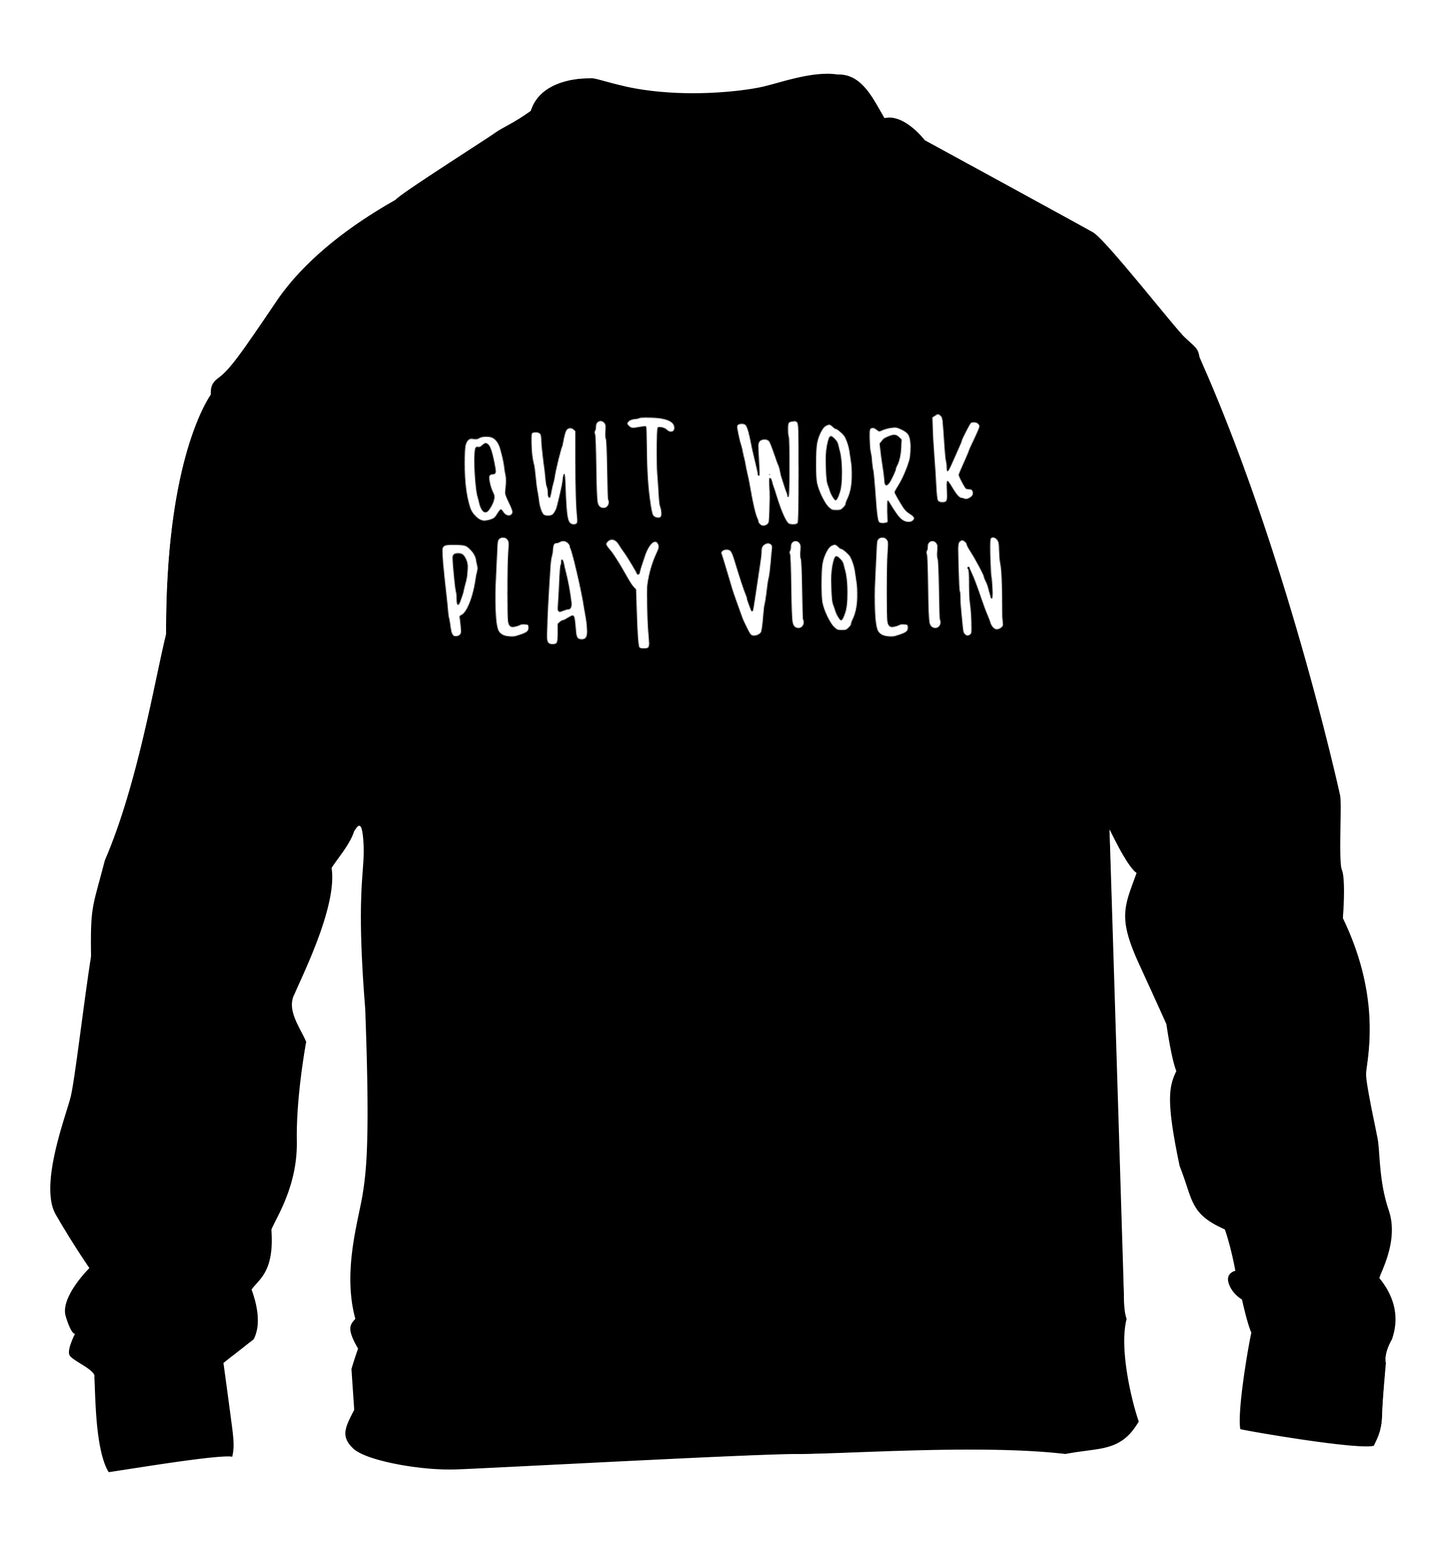 Quit work play violin children's black sweater 12-13 Years